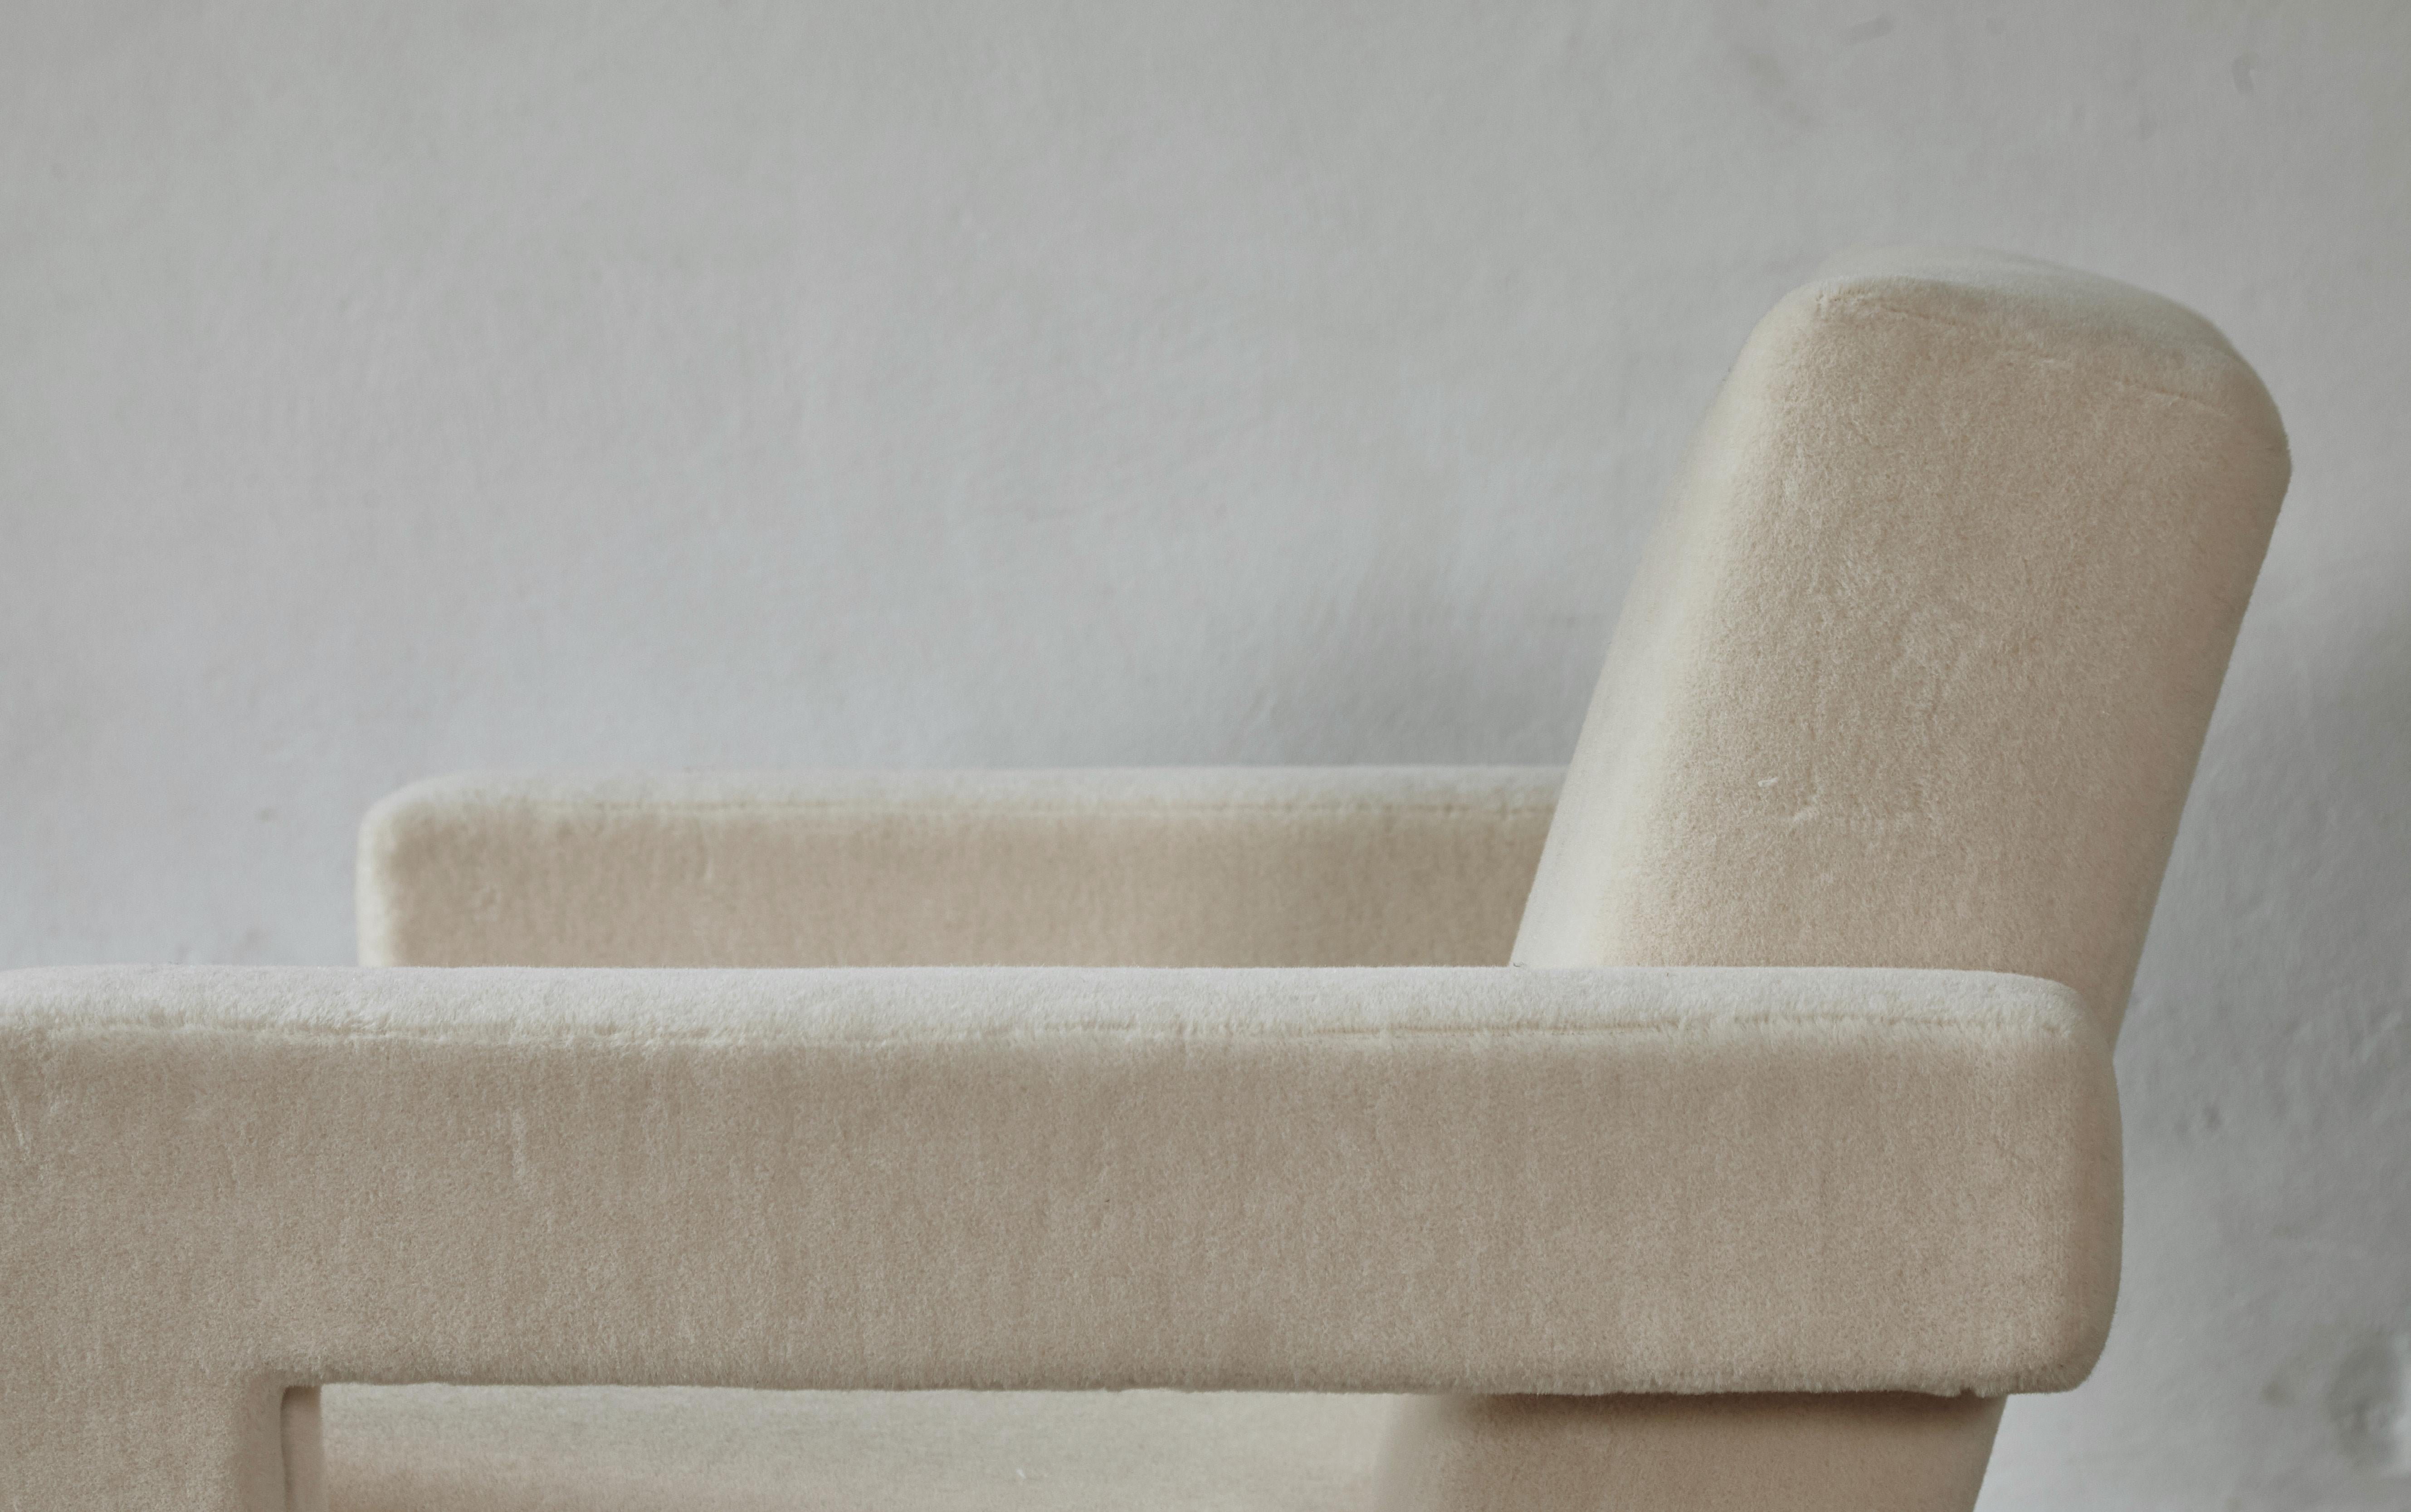 20th Century Gerrit Rietveld Utrecht Chairs, Cassina, Newly Upholstered in Pure Alpaca